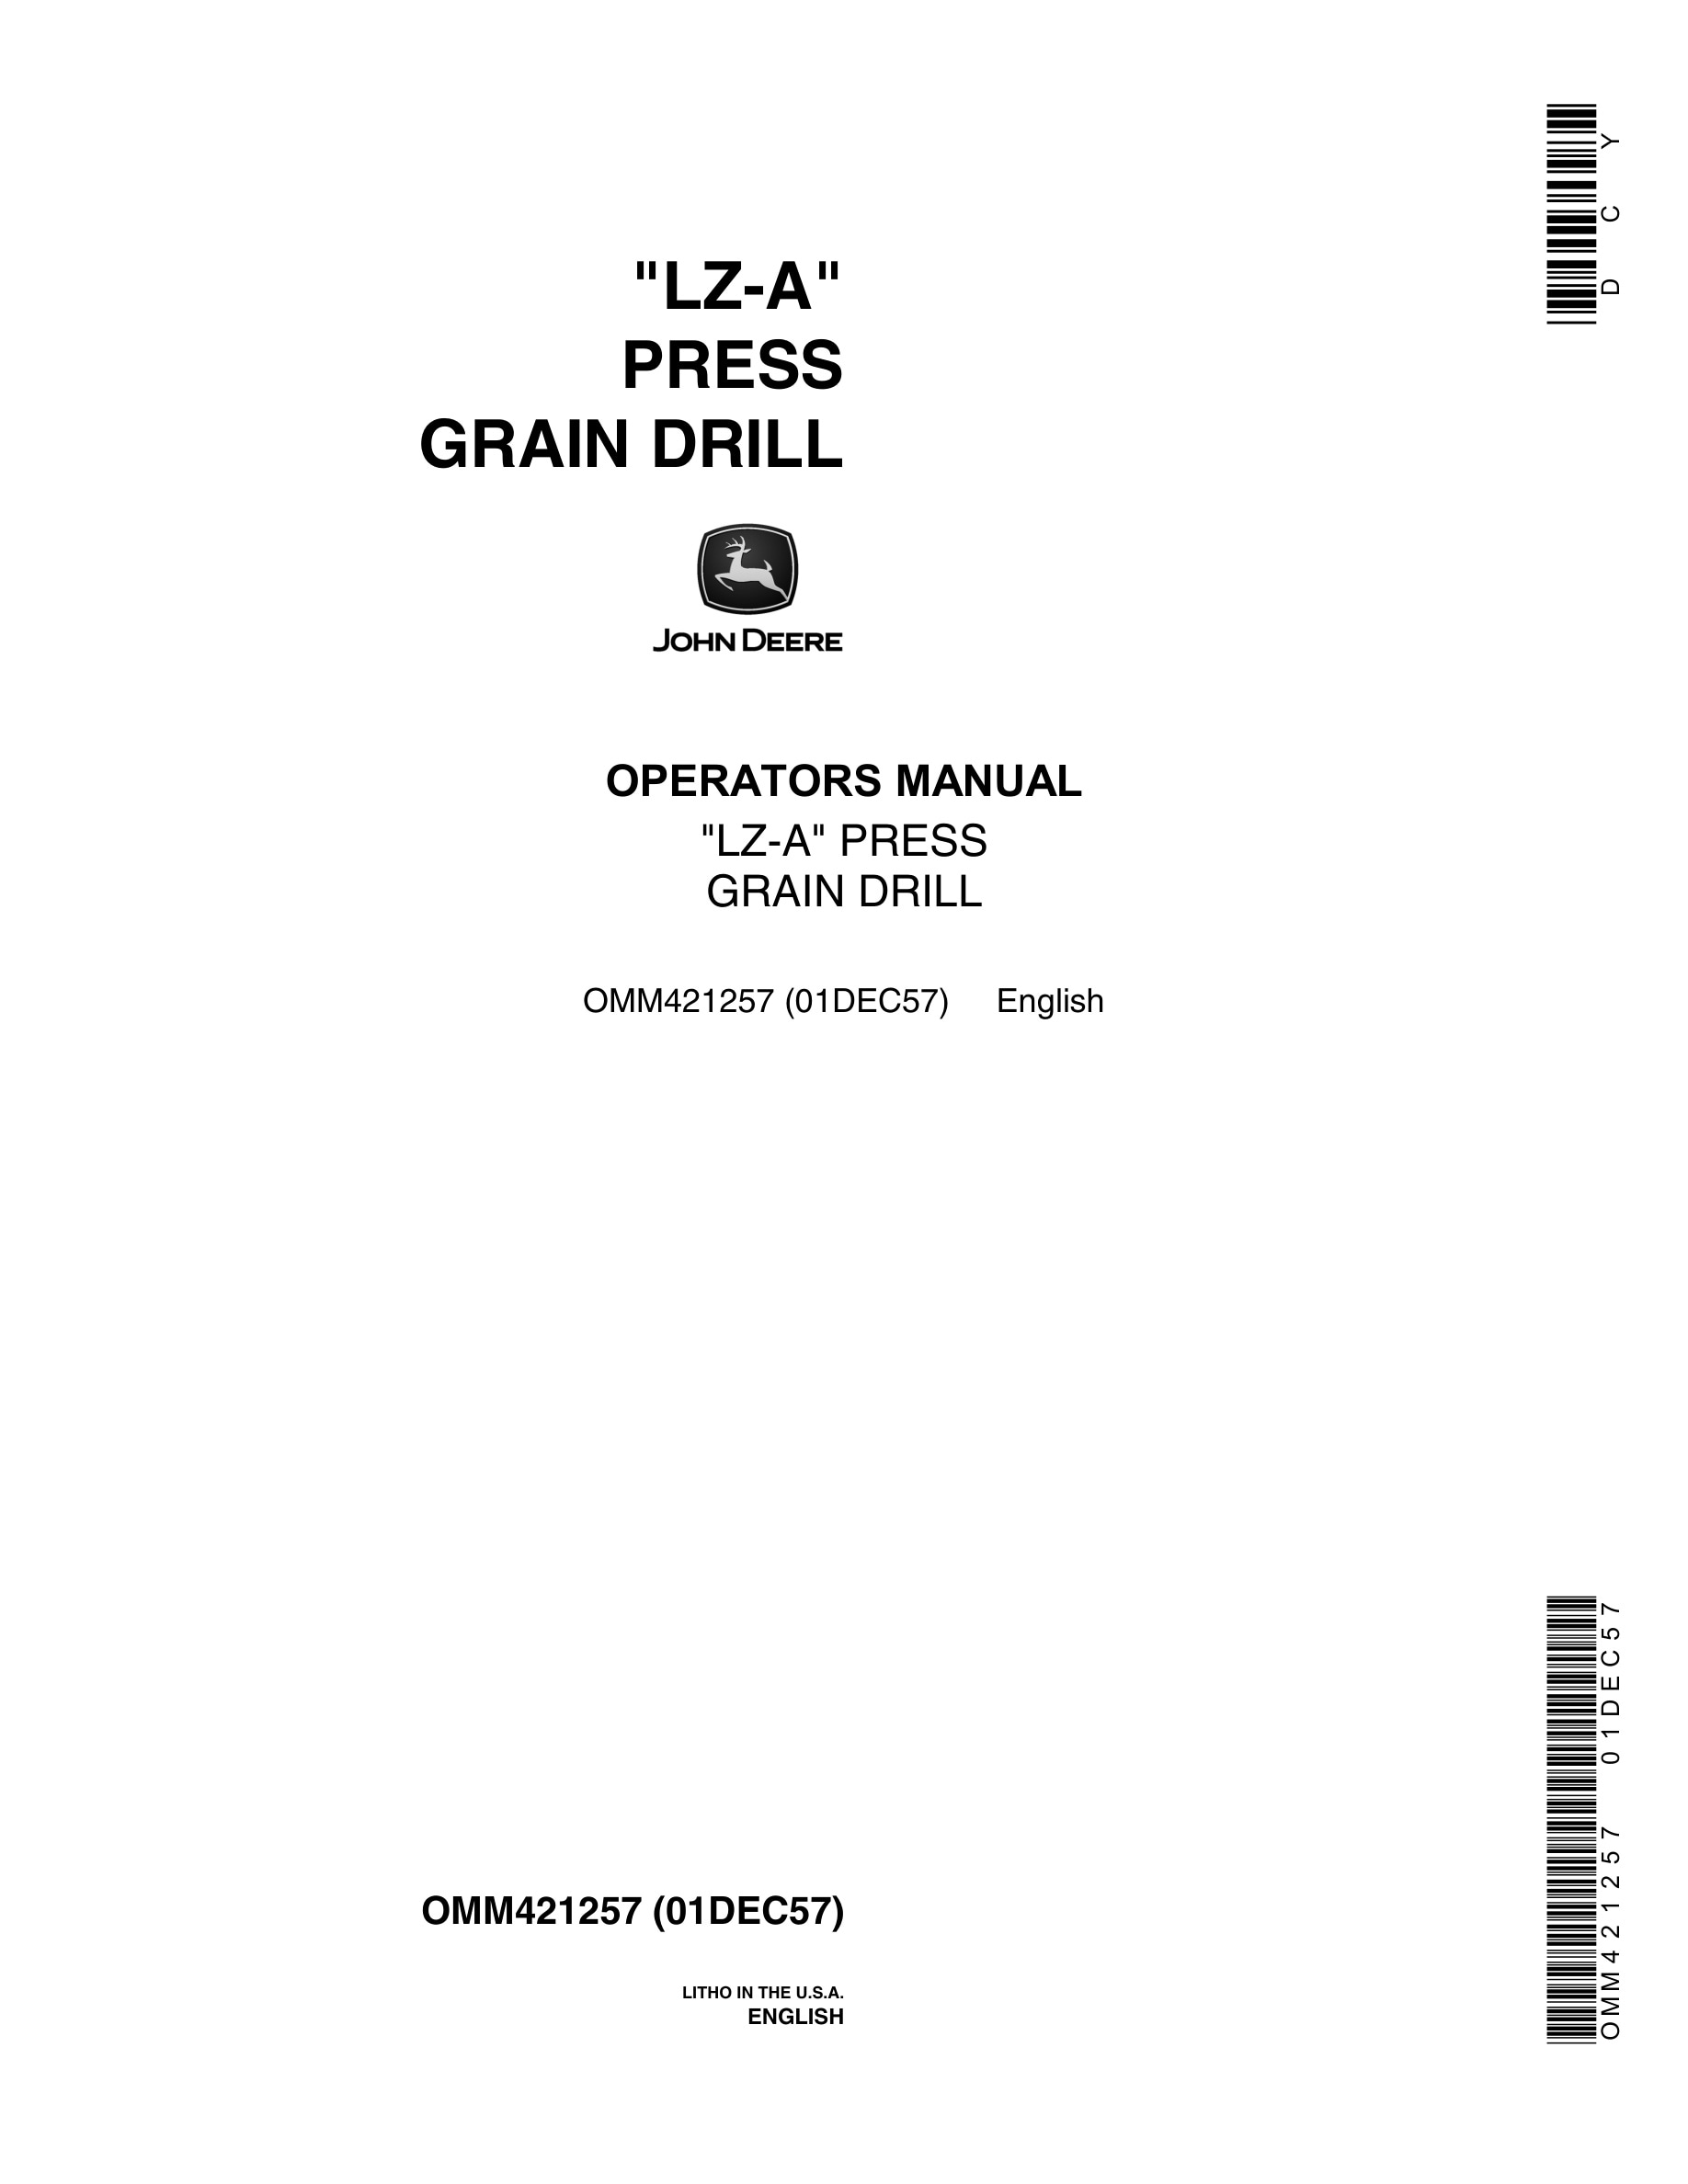 John Deere LZ-A PRESS GRAIN DRILL Operator Manual OMM421257-1